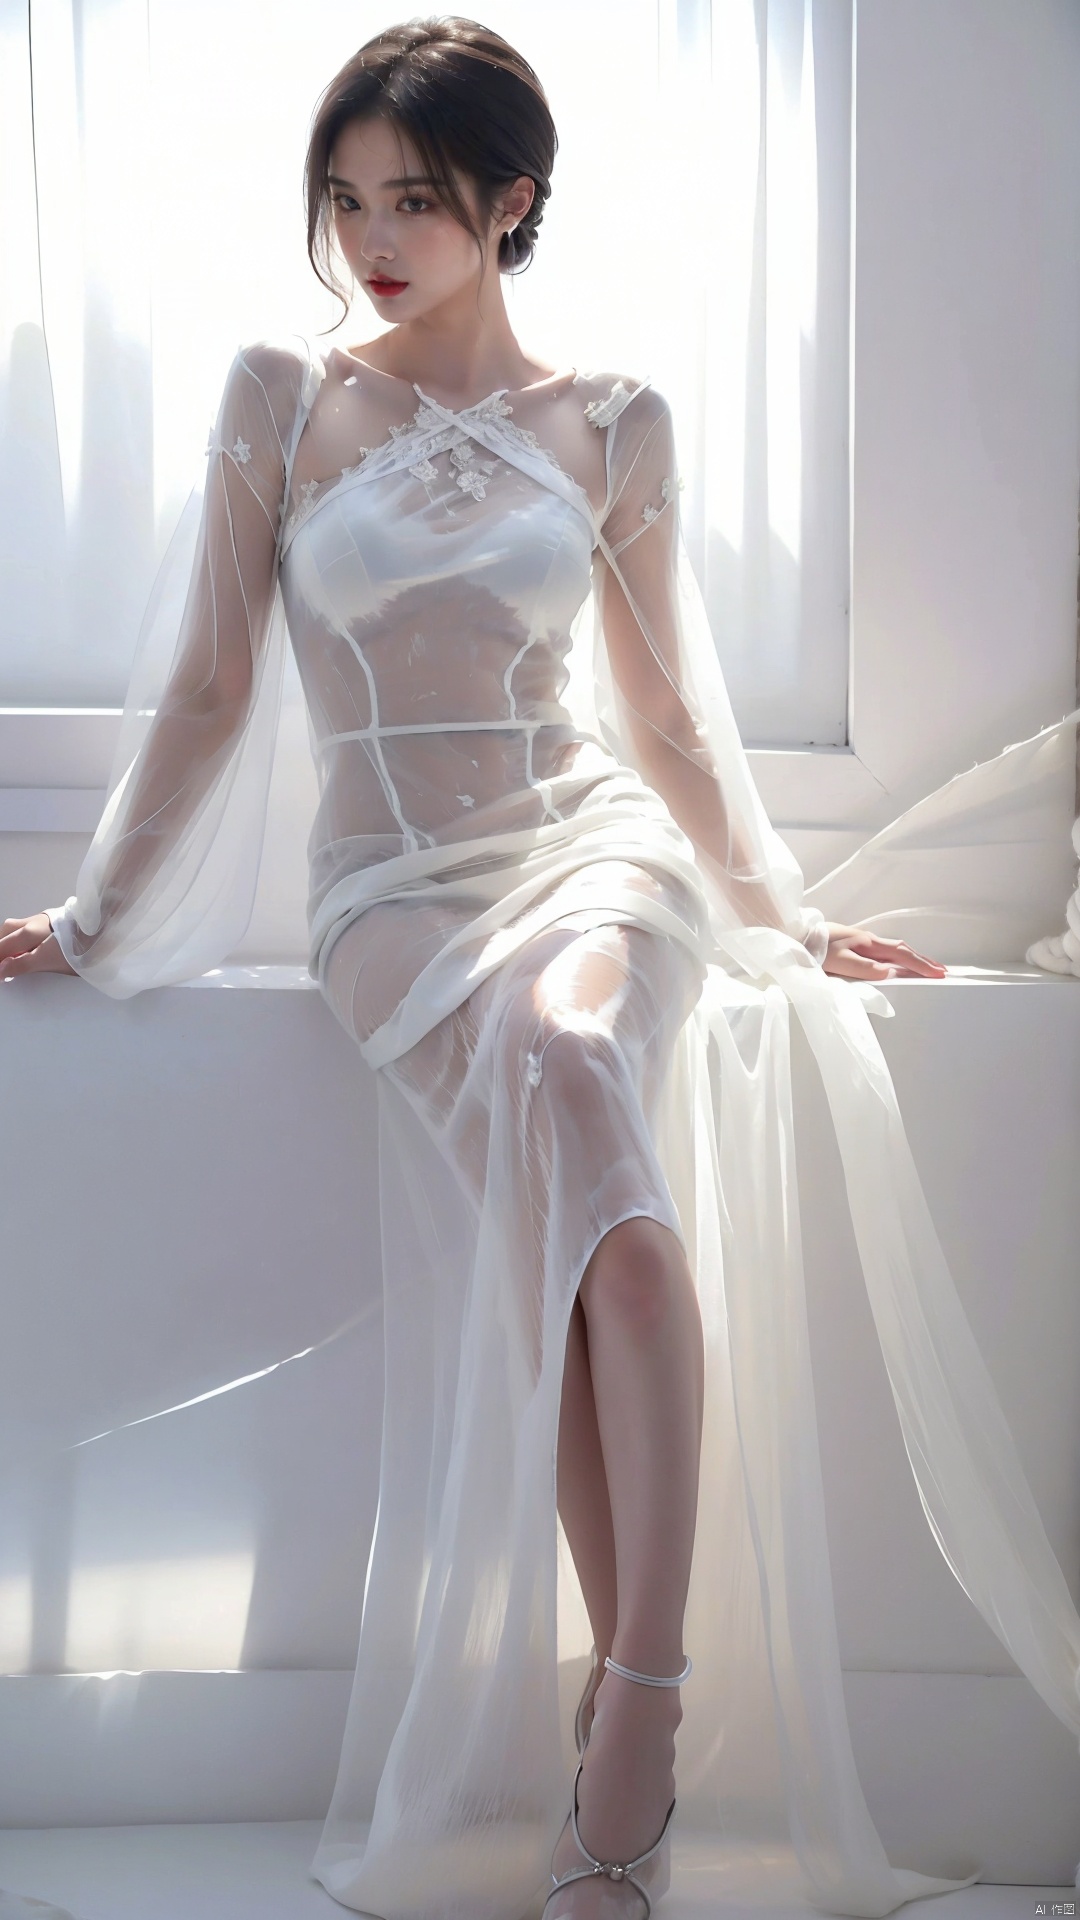  High quality, 1girl, (translucent white yarn dress: 1.5), sitting